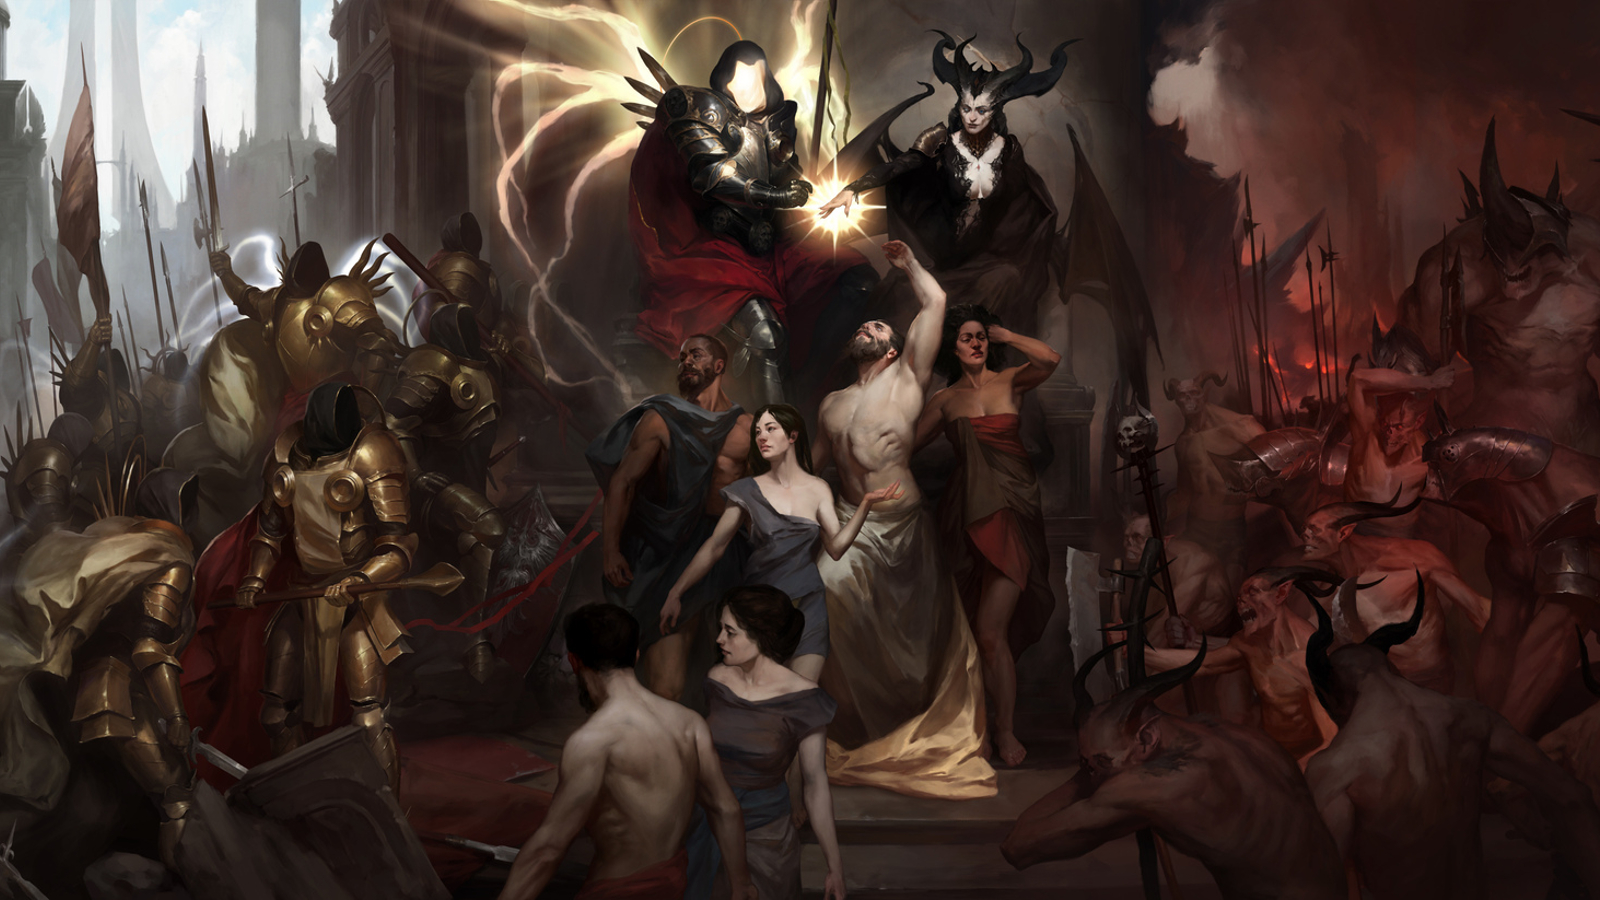 Diablo 4 Season 2 Tier List: The Best Builds For Leveling, Endgame & PVP in  Season